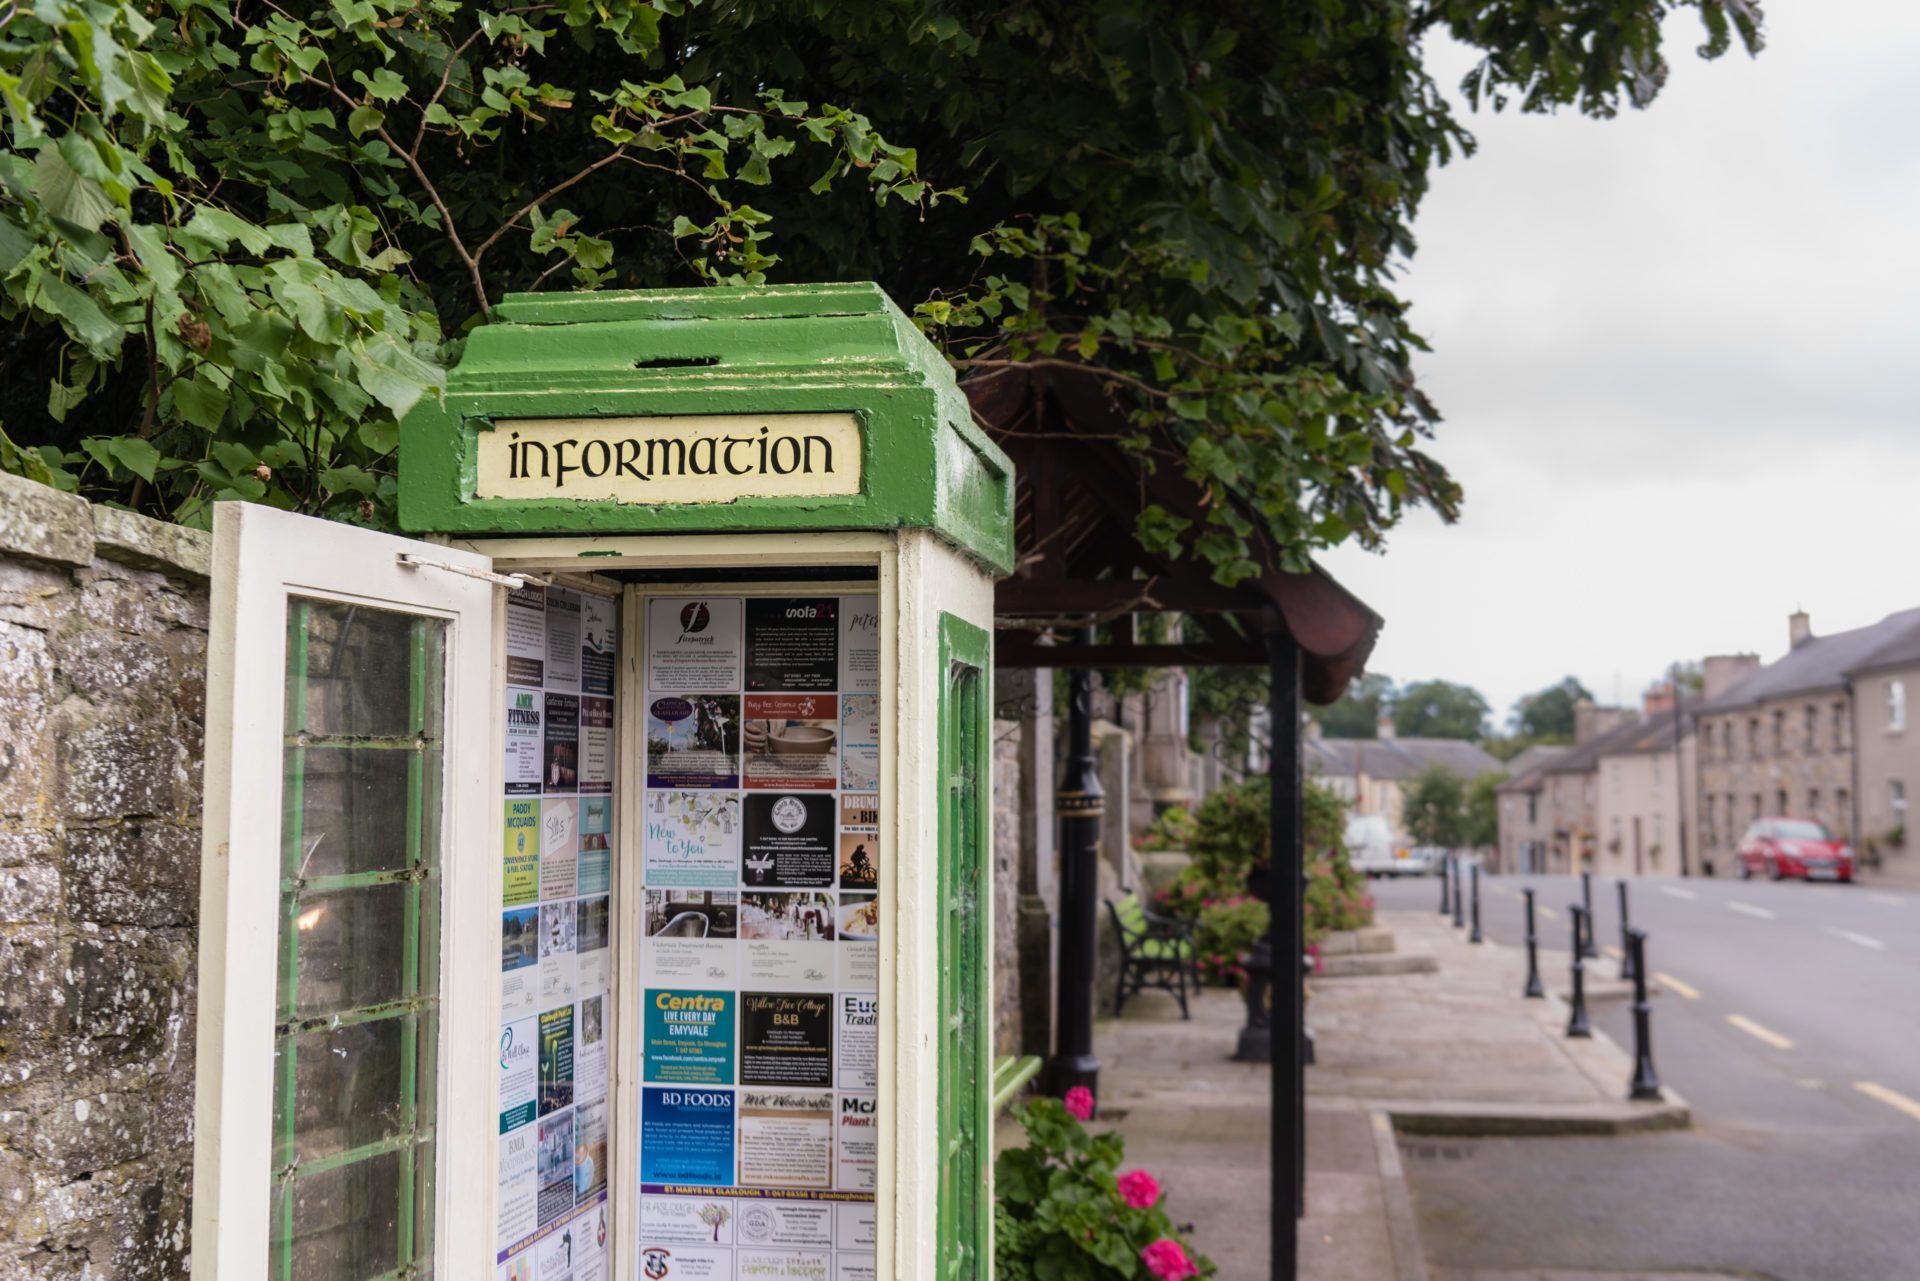 Disused Irish telephone box now serving as a community information information display board. Image: Stephen Barnes/Ireland / Alamy Stock Photo